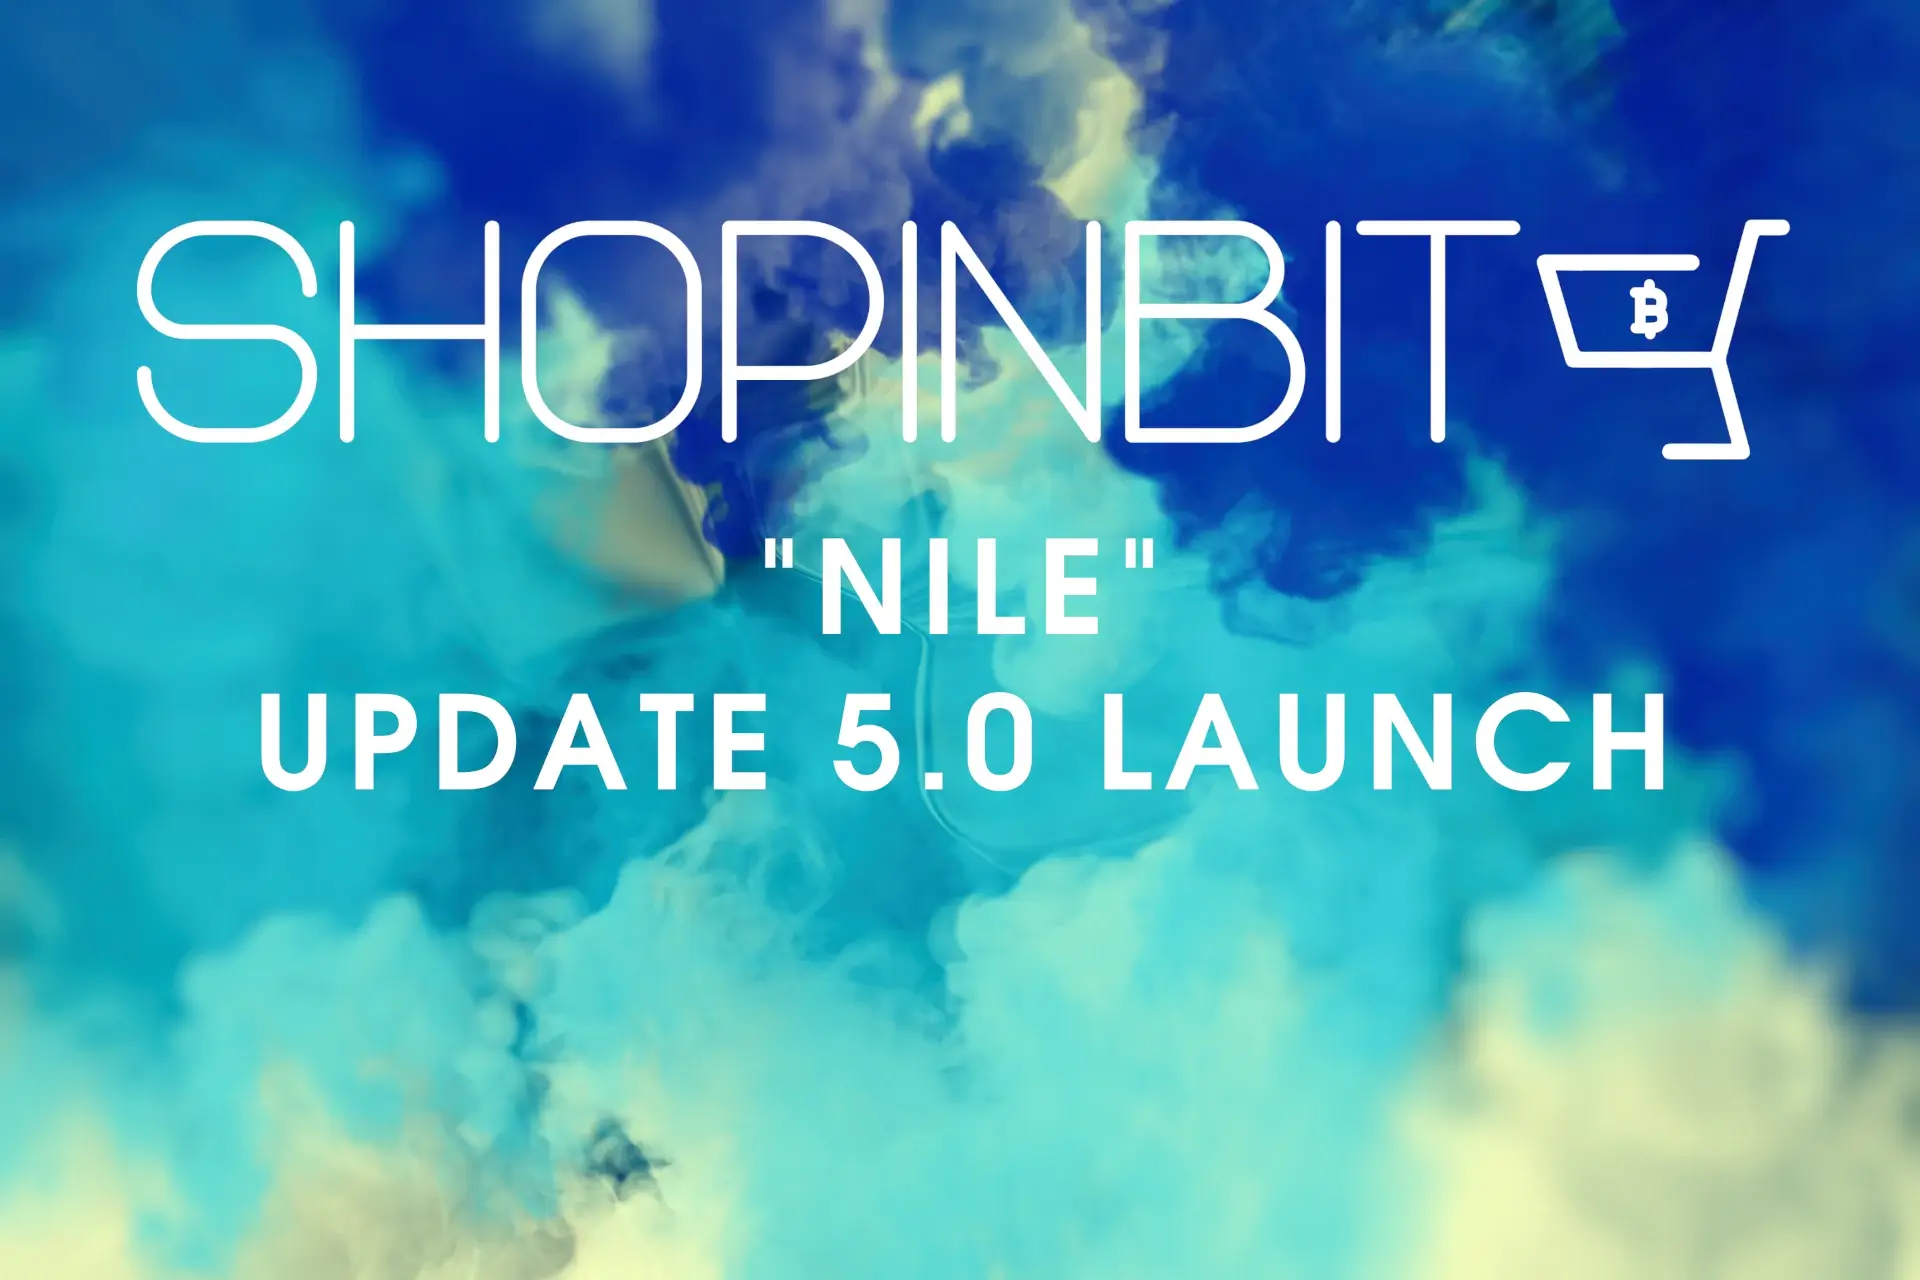 The SHOPINBIT 5.0 UPDATE "NILE"